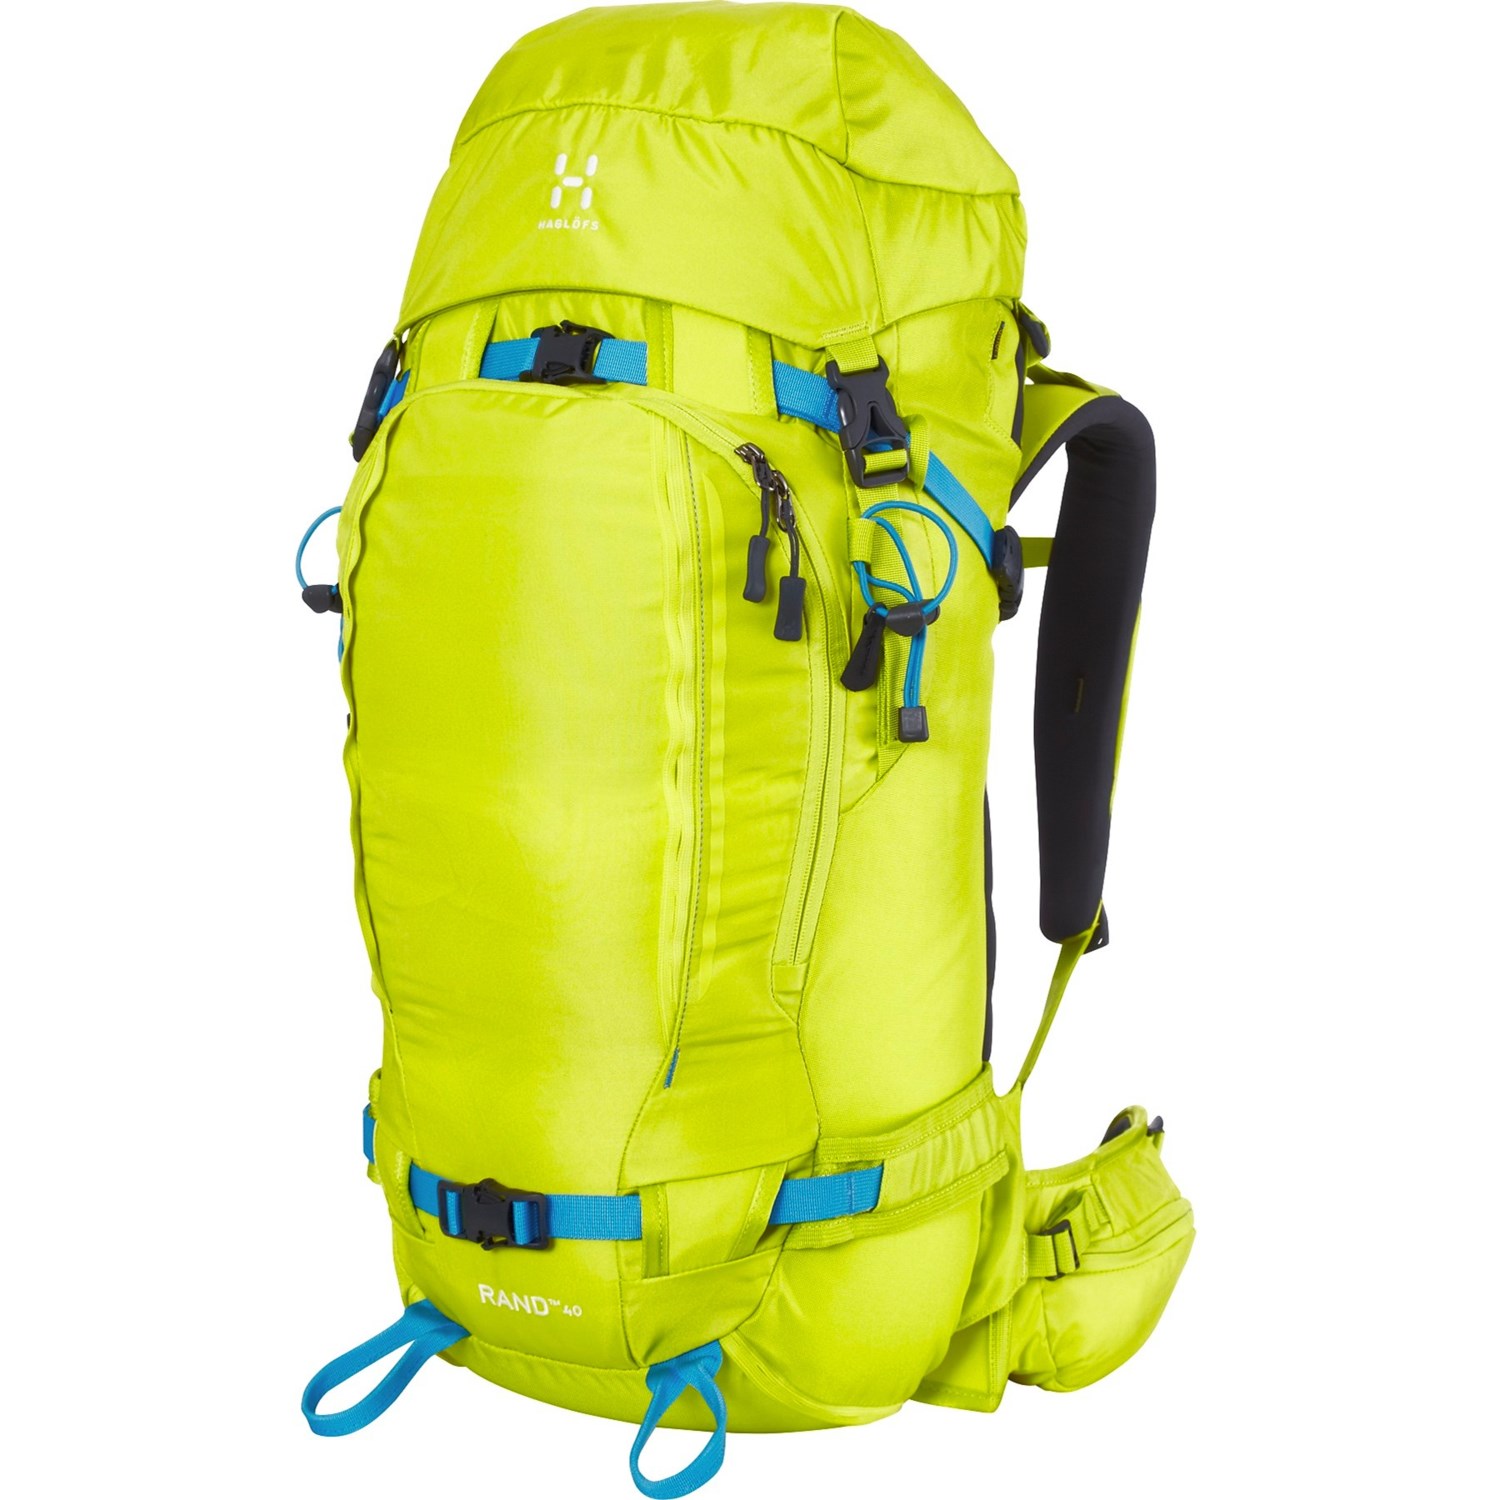 Haglofs Rand 40 Snowsport Backpack - Internal Frame in Firefly